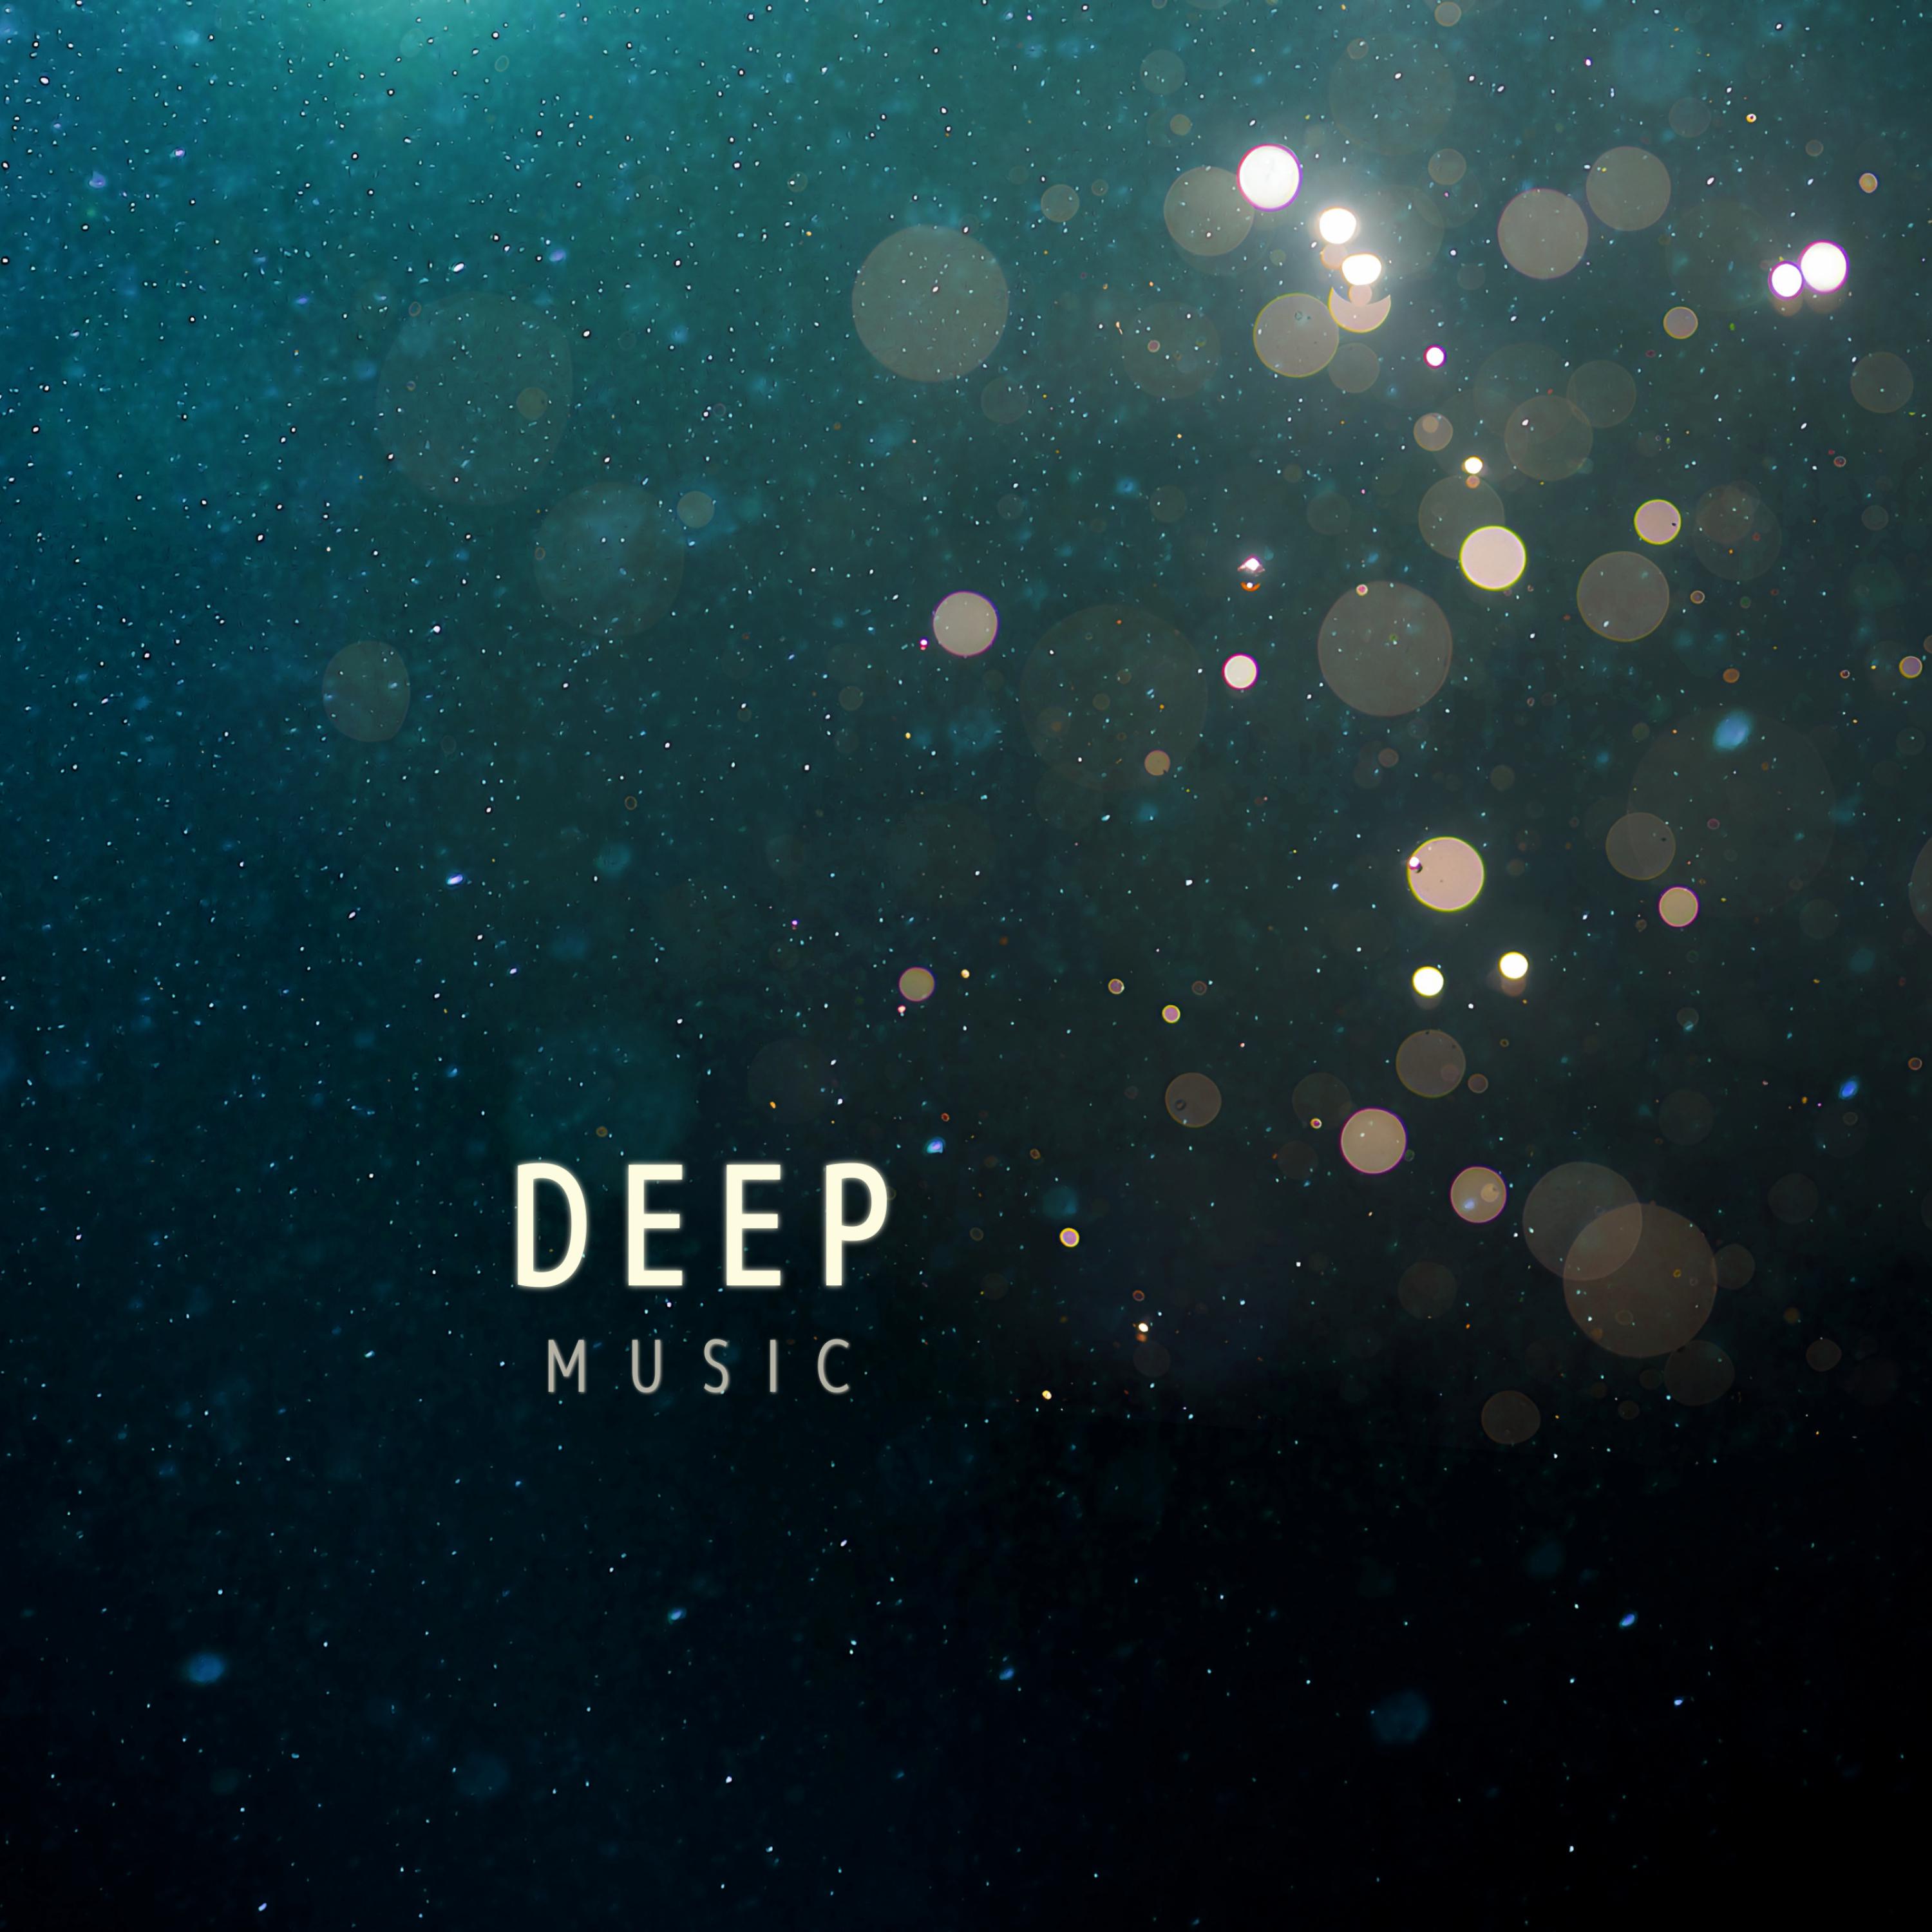 Deep Music - Lonely Universe Sleep Music